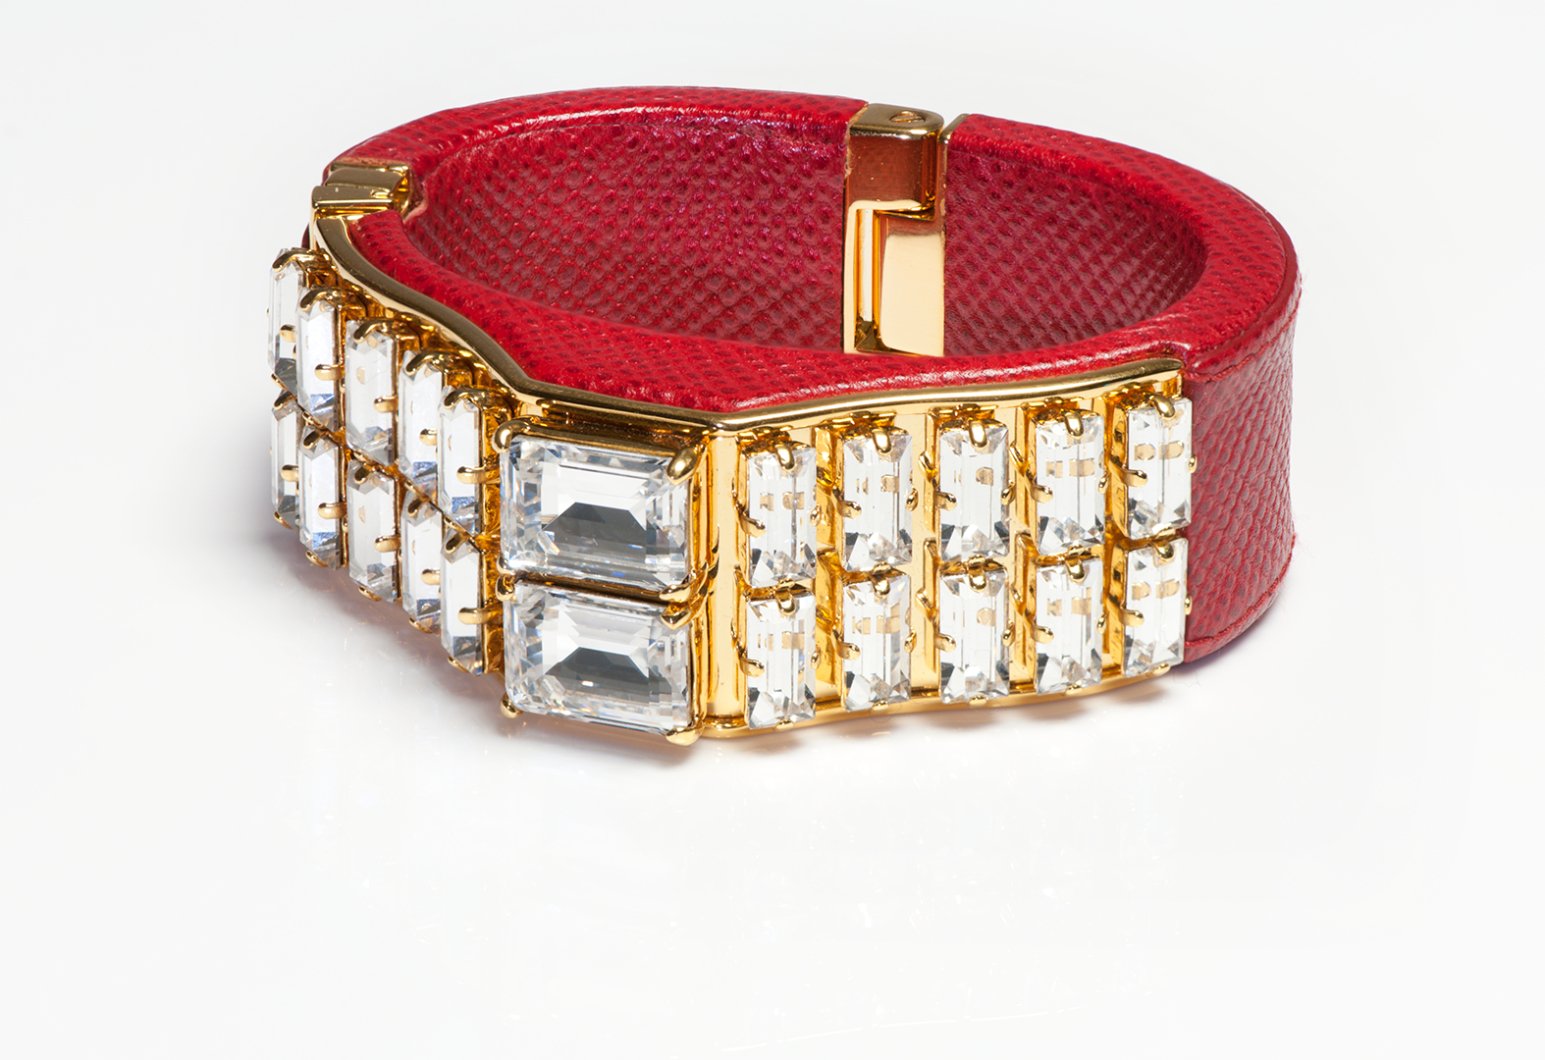 PRADA Spring 2014 Red Leather Crystal Geometric Women’s Bracelet